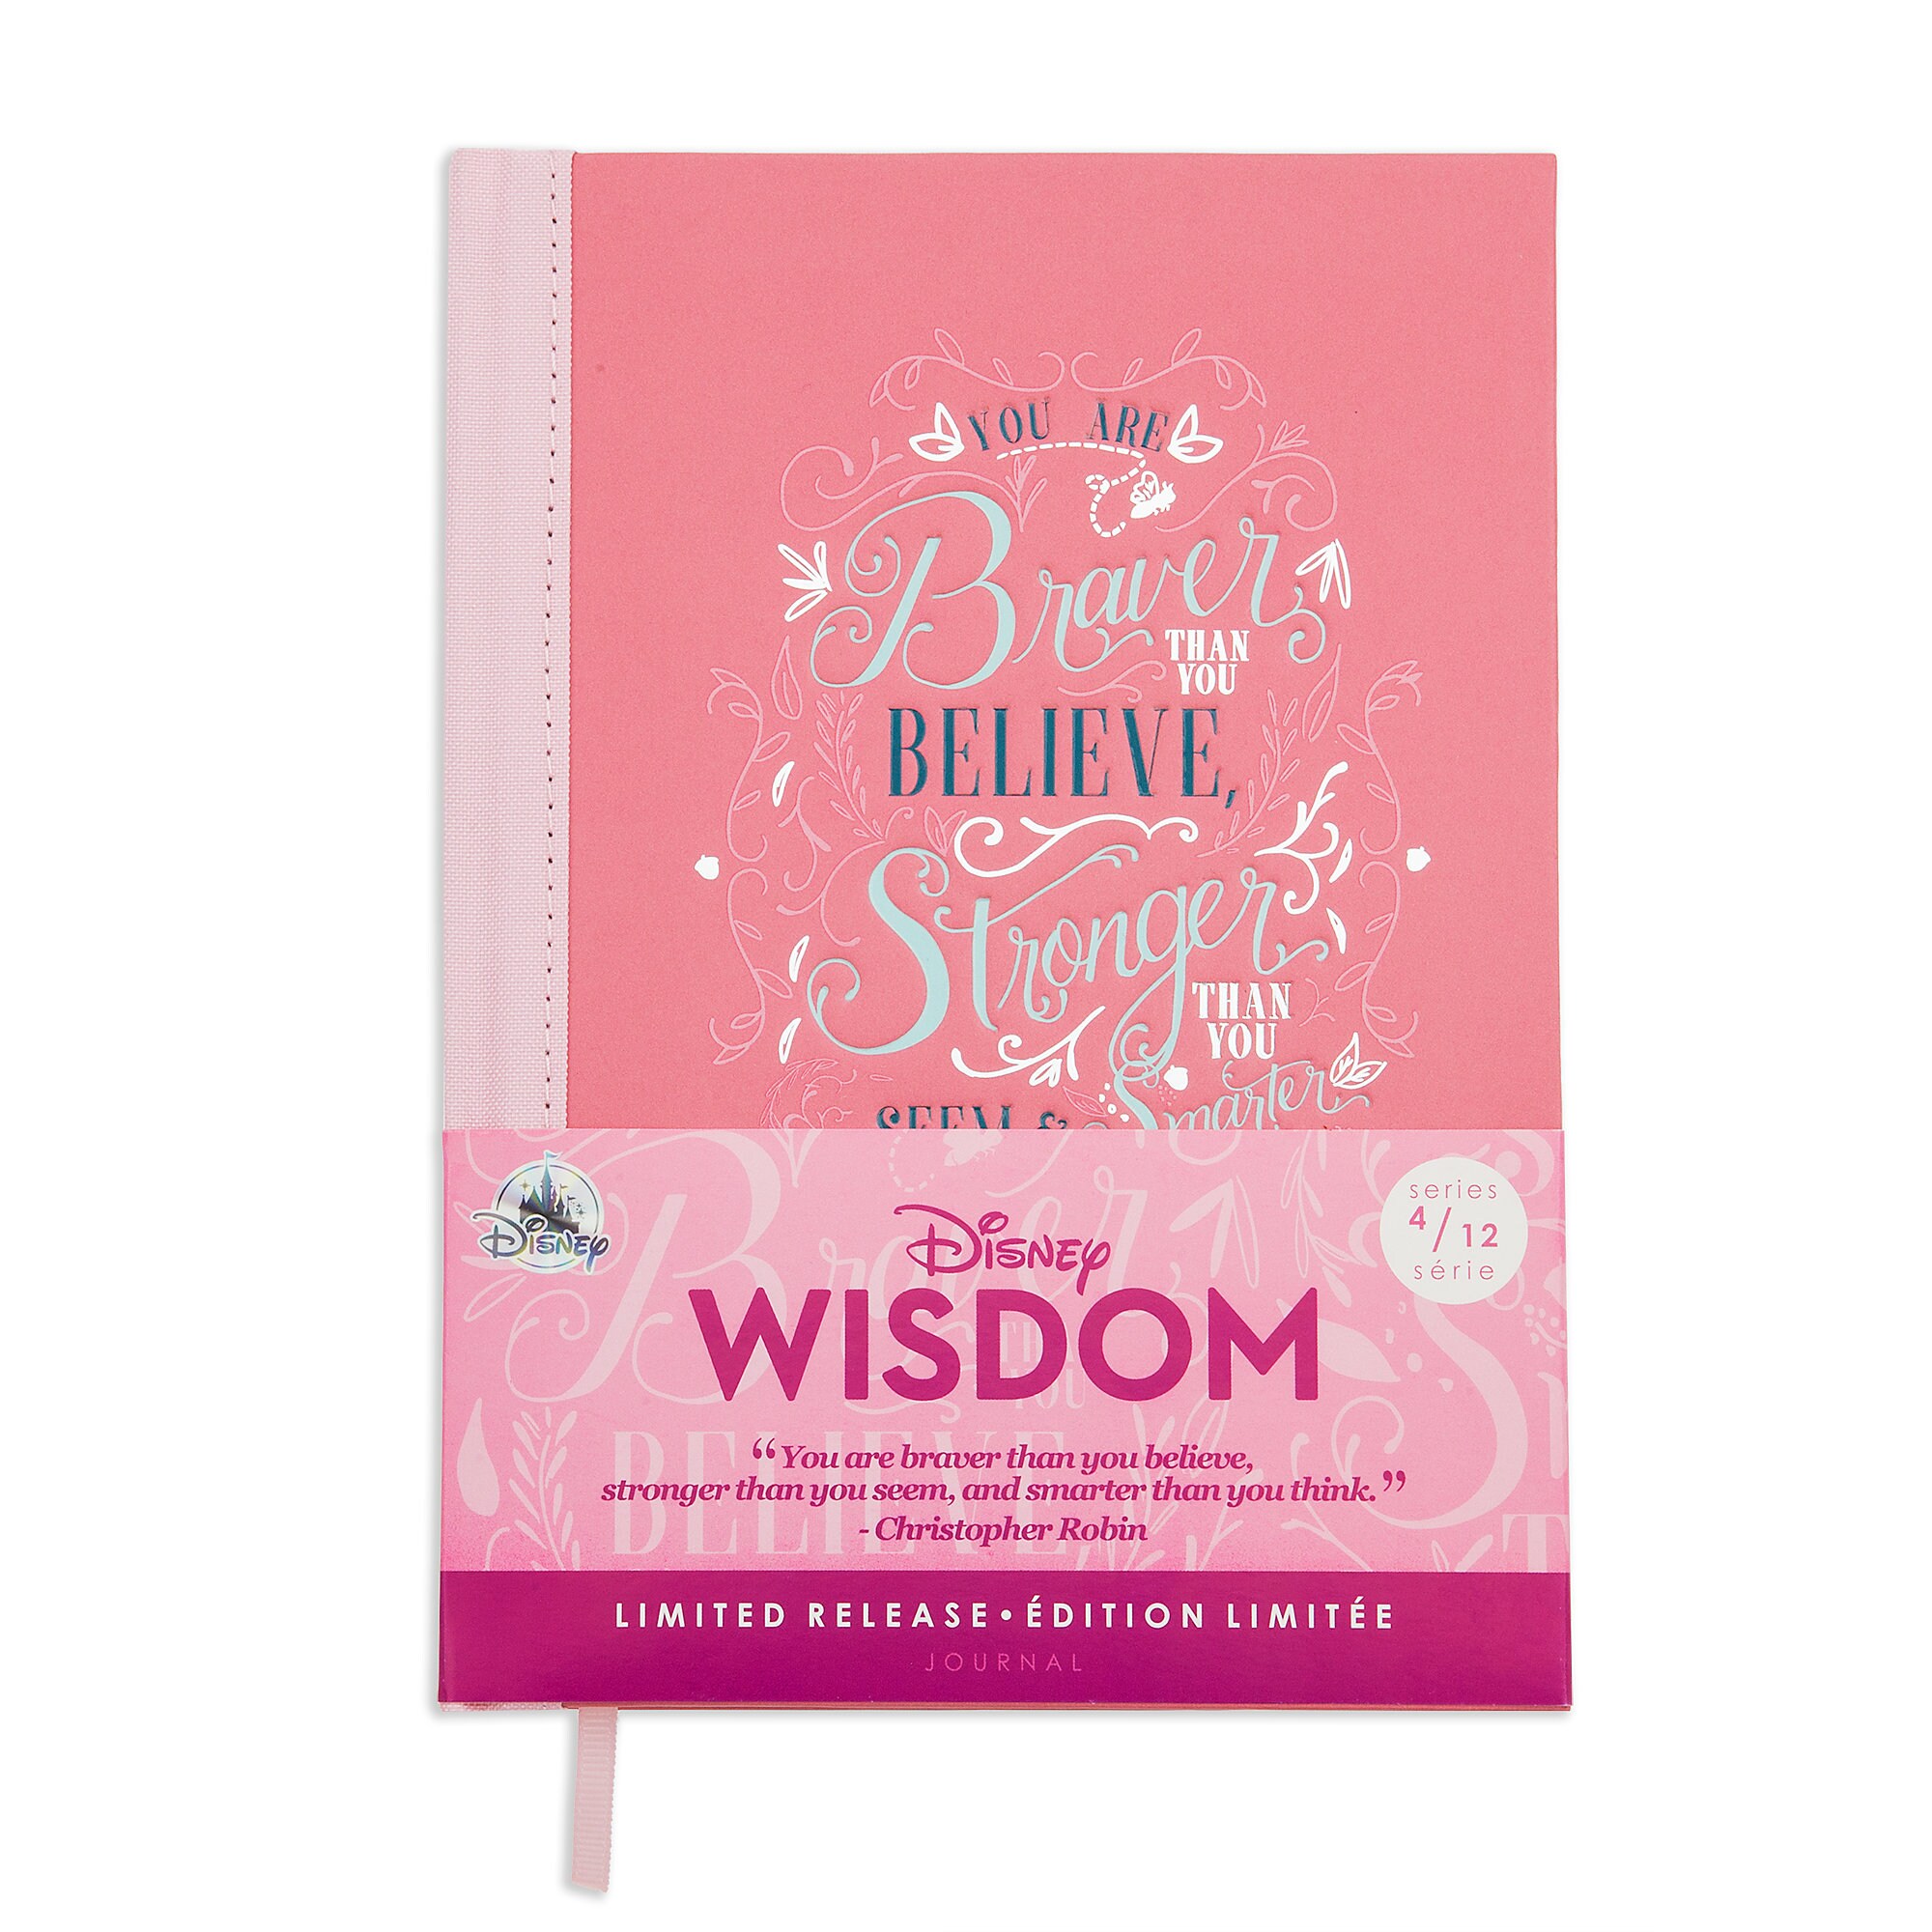 Disney Wisdom Journal - Piglet - April - Limited Release